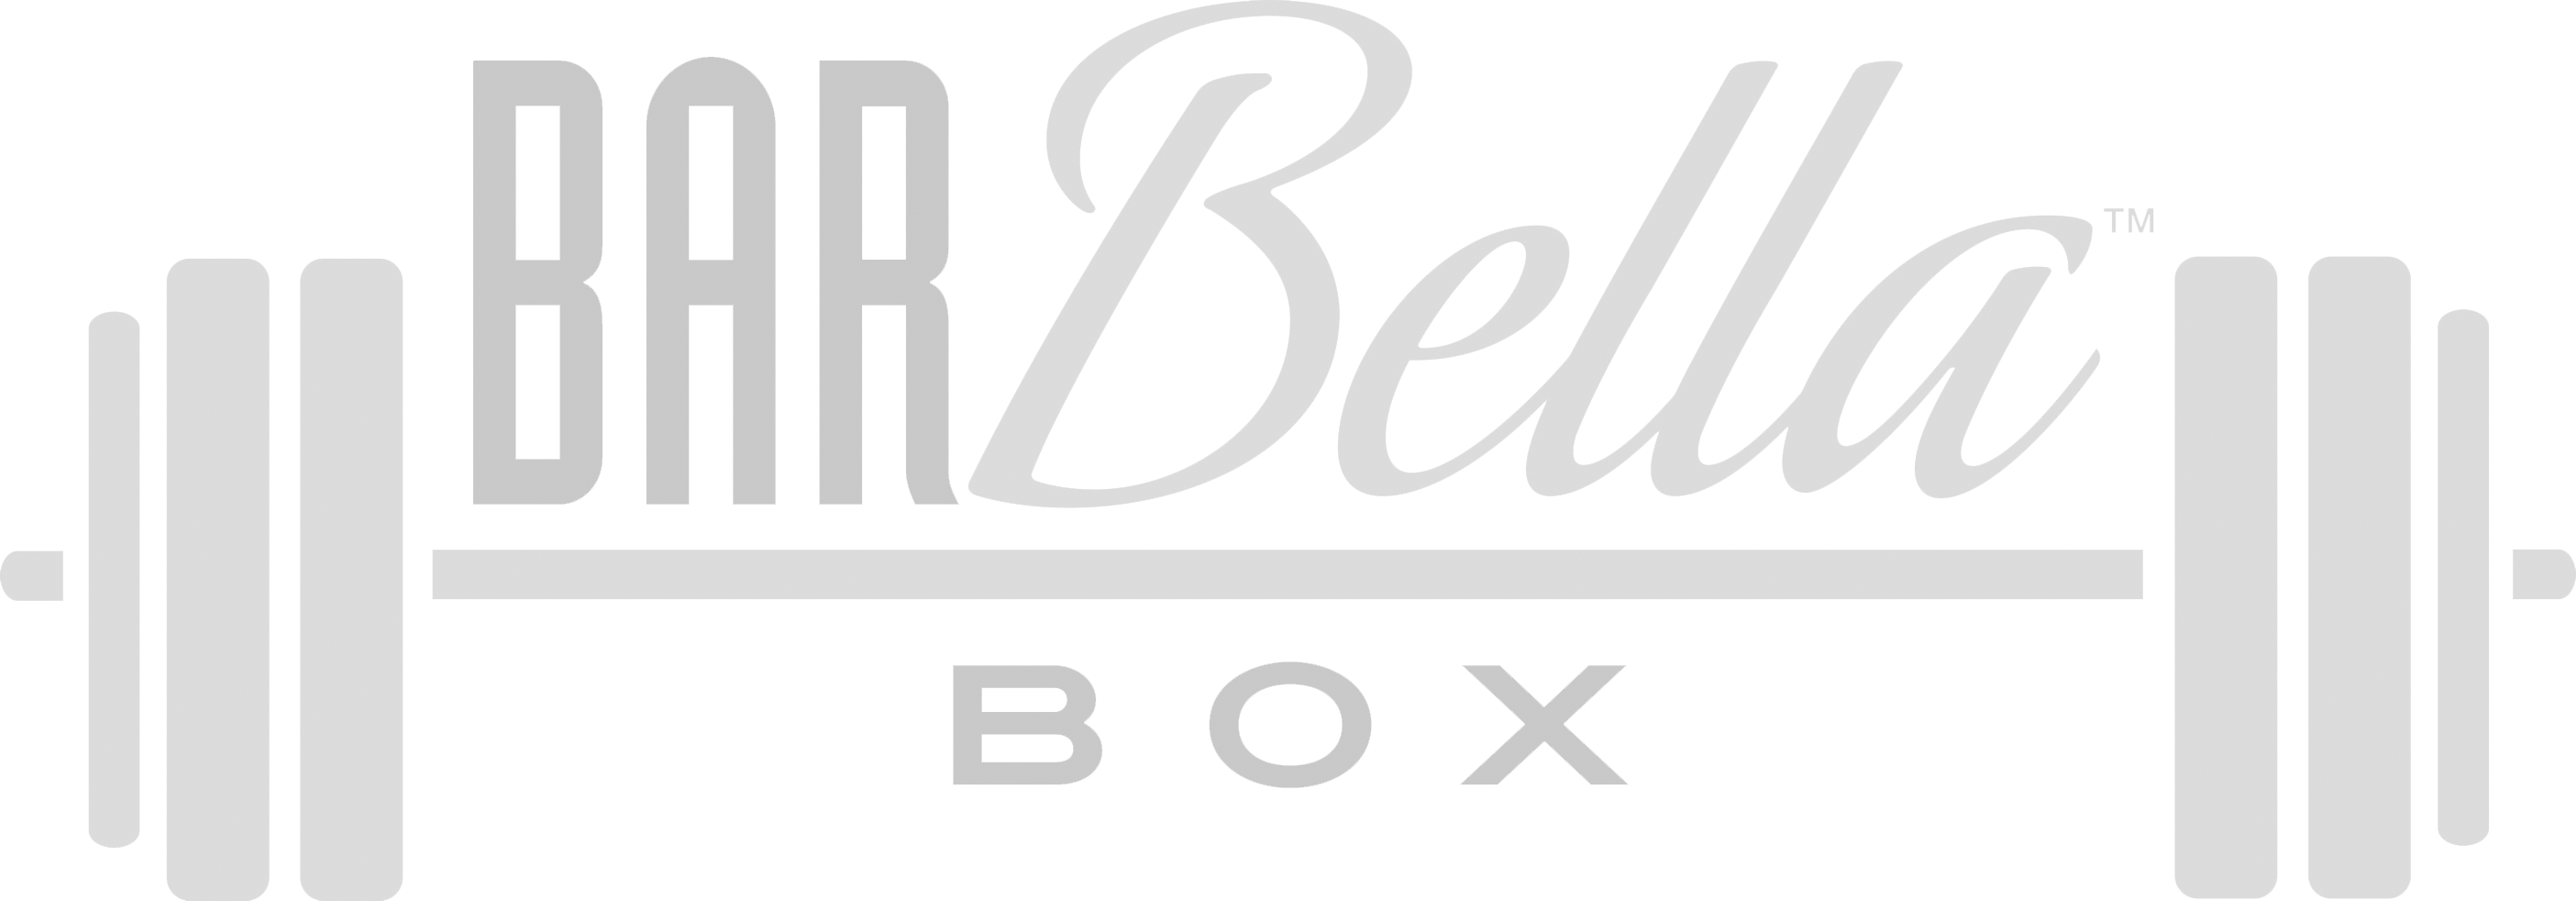 barbella box logo